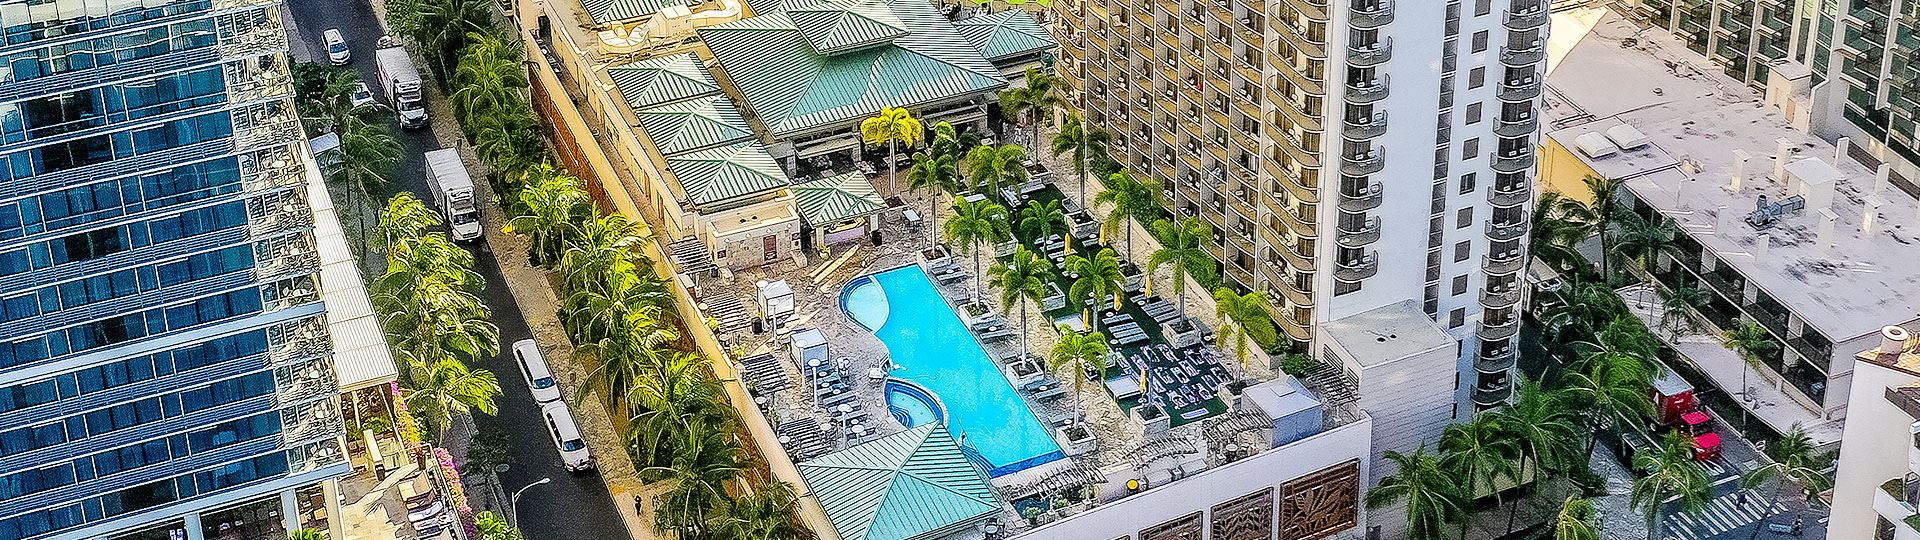 Amenities of Honolulu, Hawaii Hotel